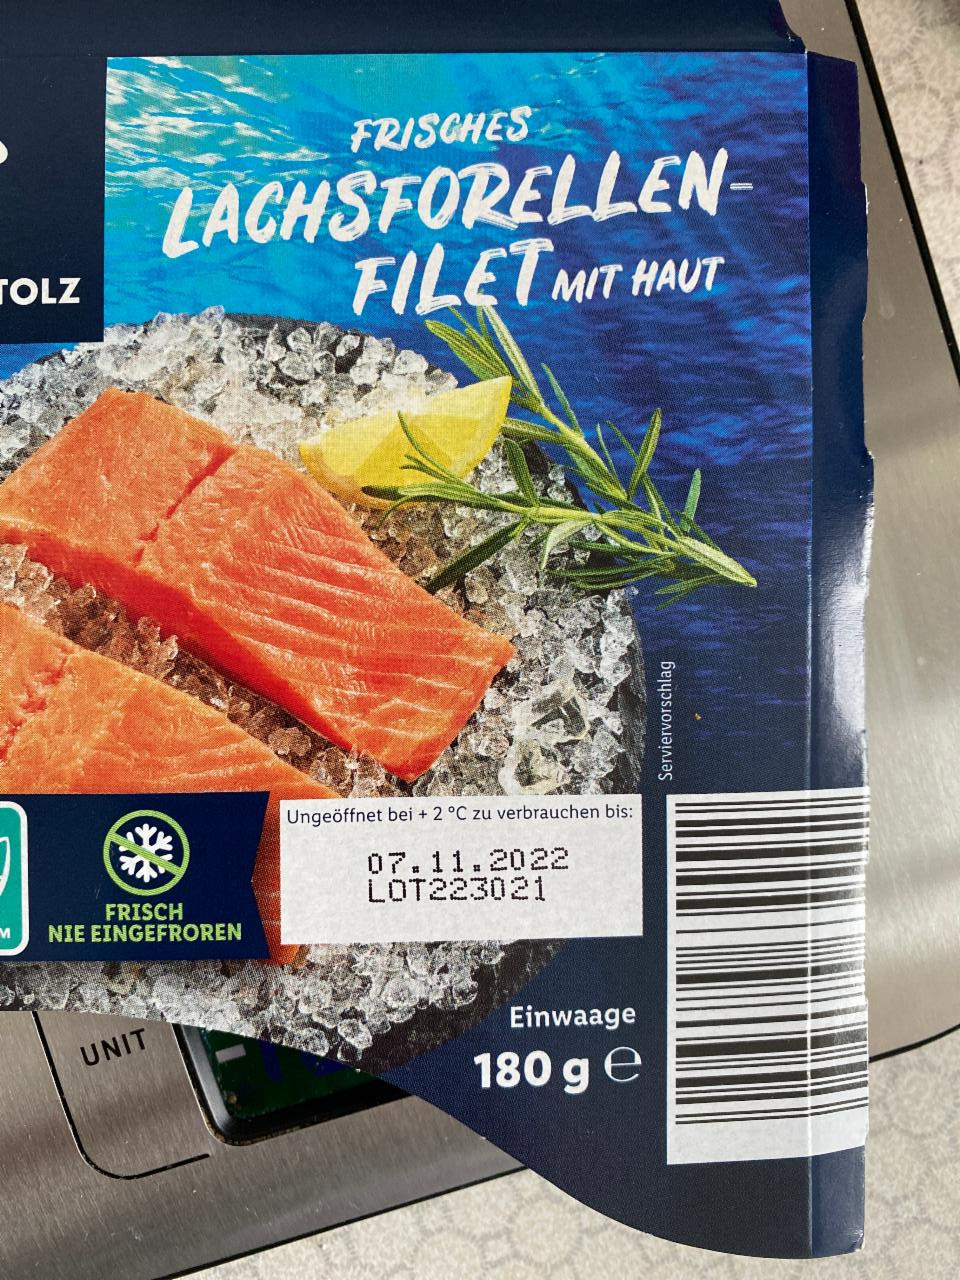 Фото - Филе лососевой форели Frisches Lachsforellen Filet mit Haut FischerStolz